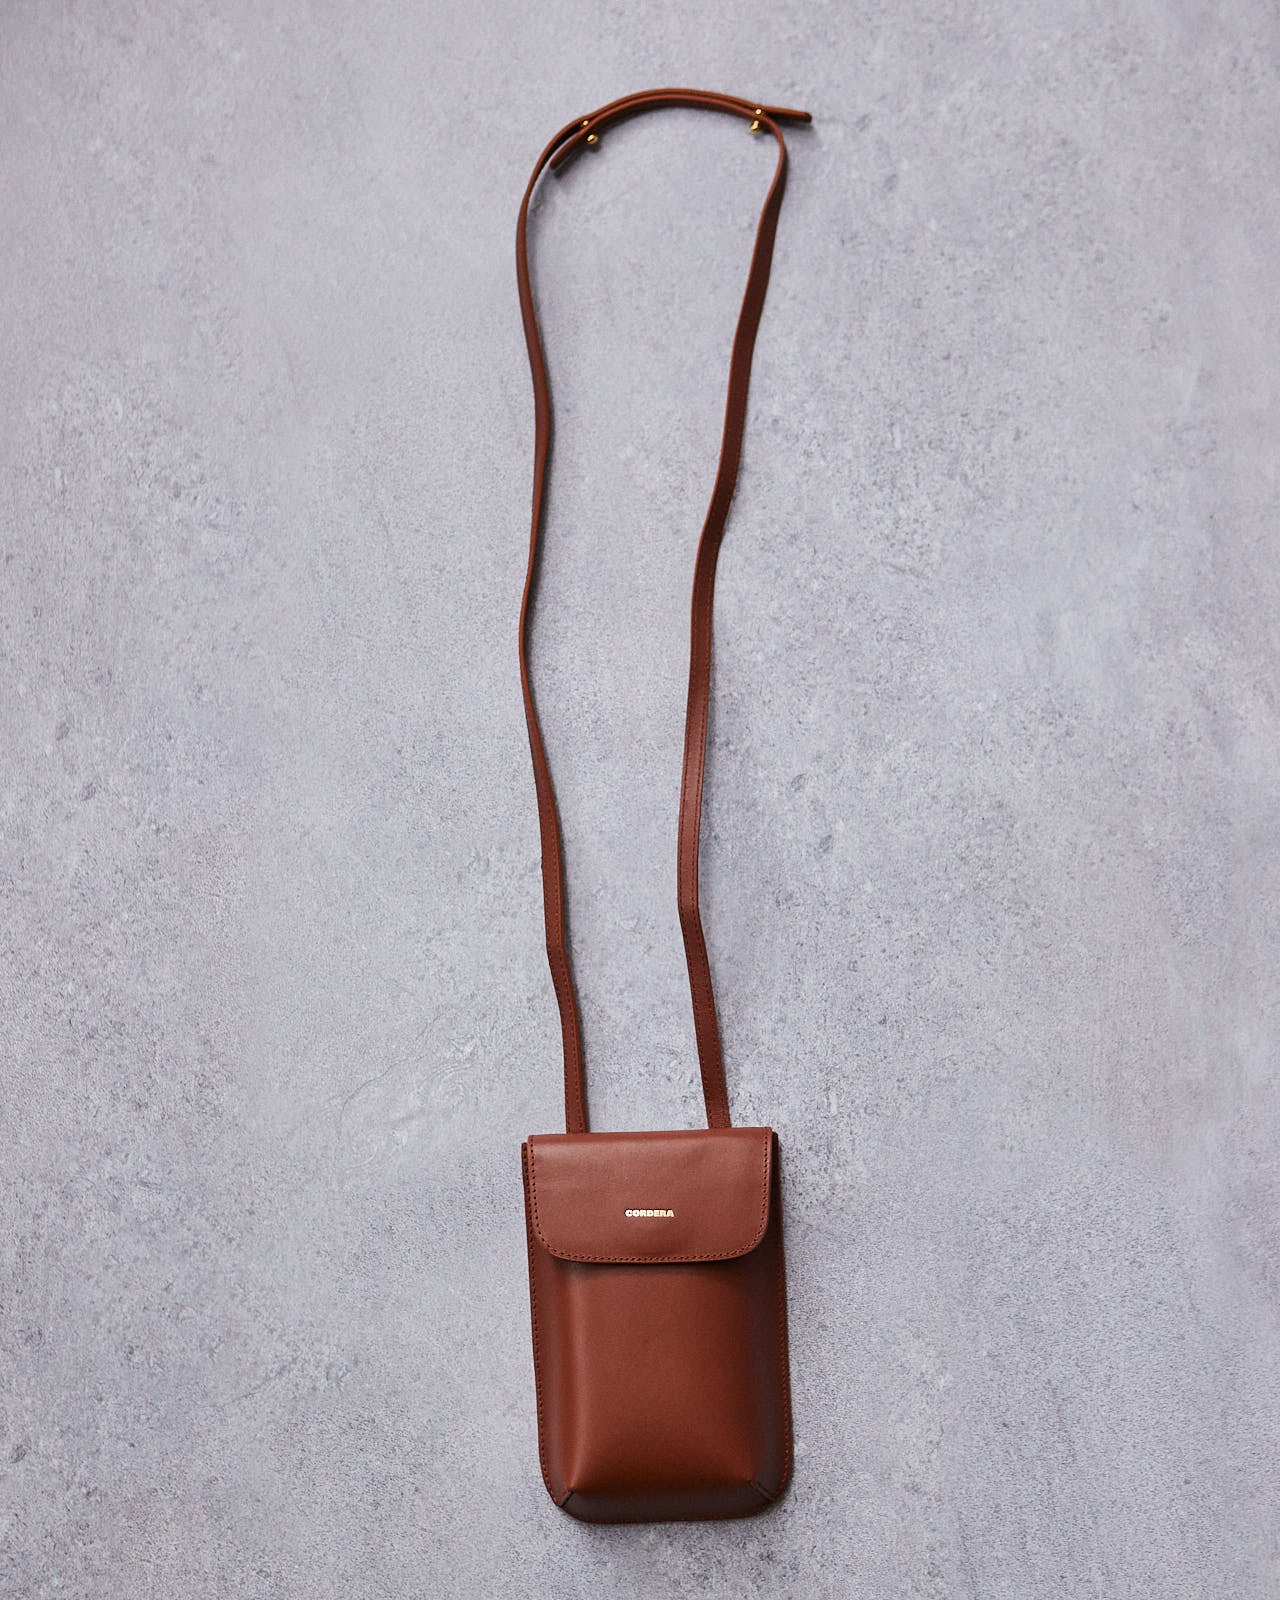 Luxury Leather Handbag – Black / Camel Chardonnay – PFenning Leather